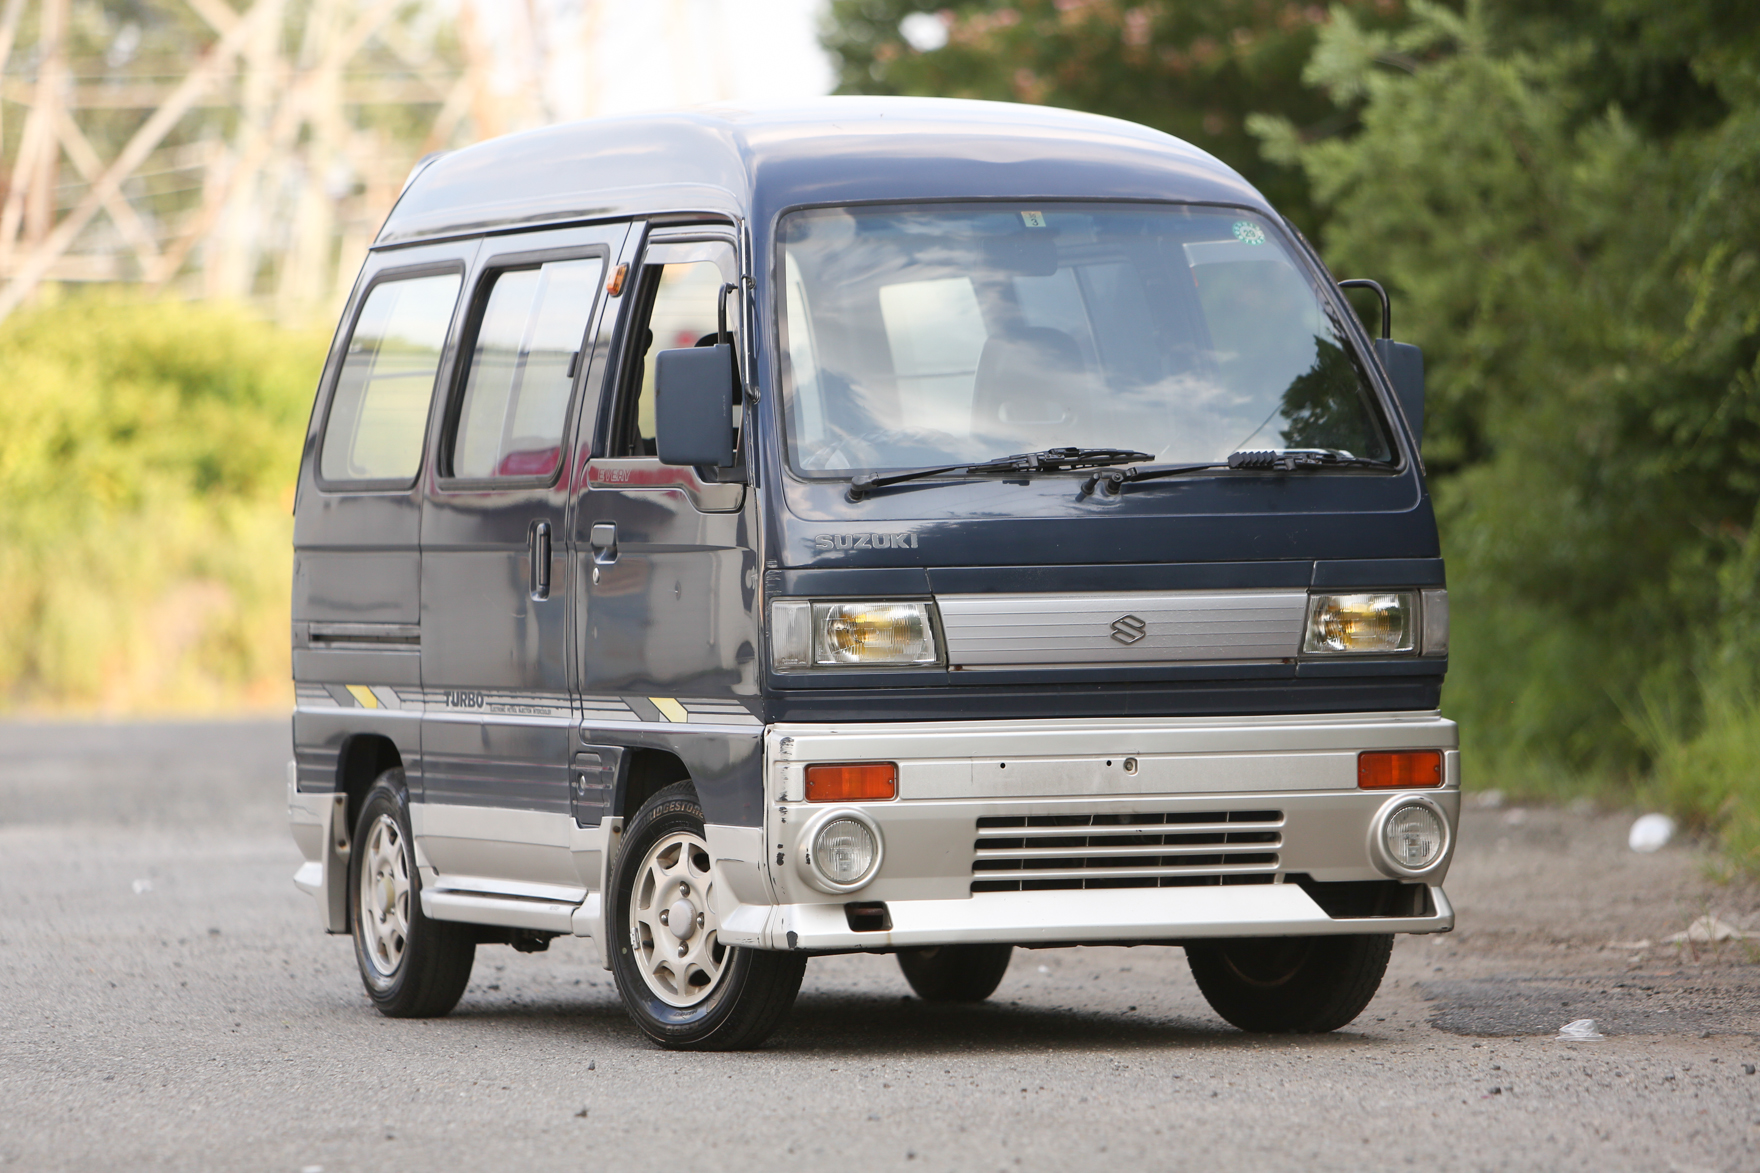 1989 Suzuki Every Van 4WD TURBO - $6,850